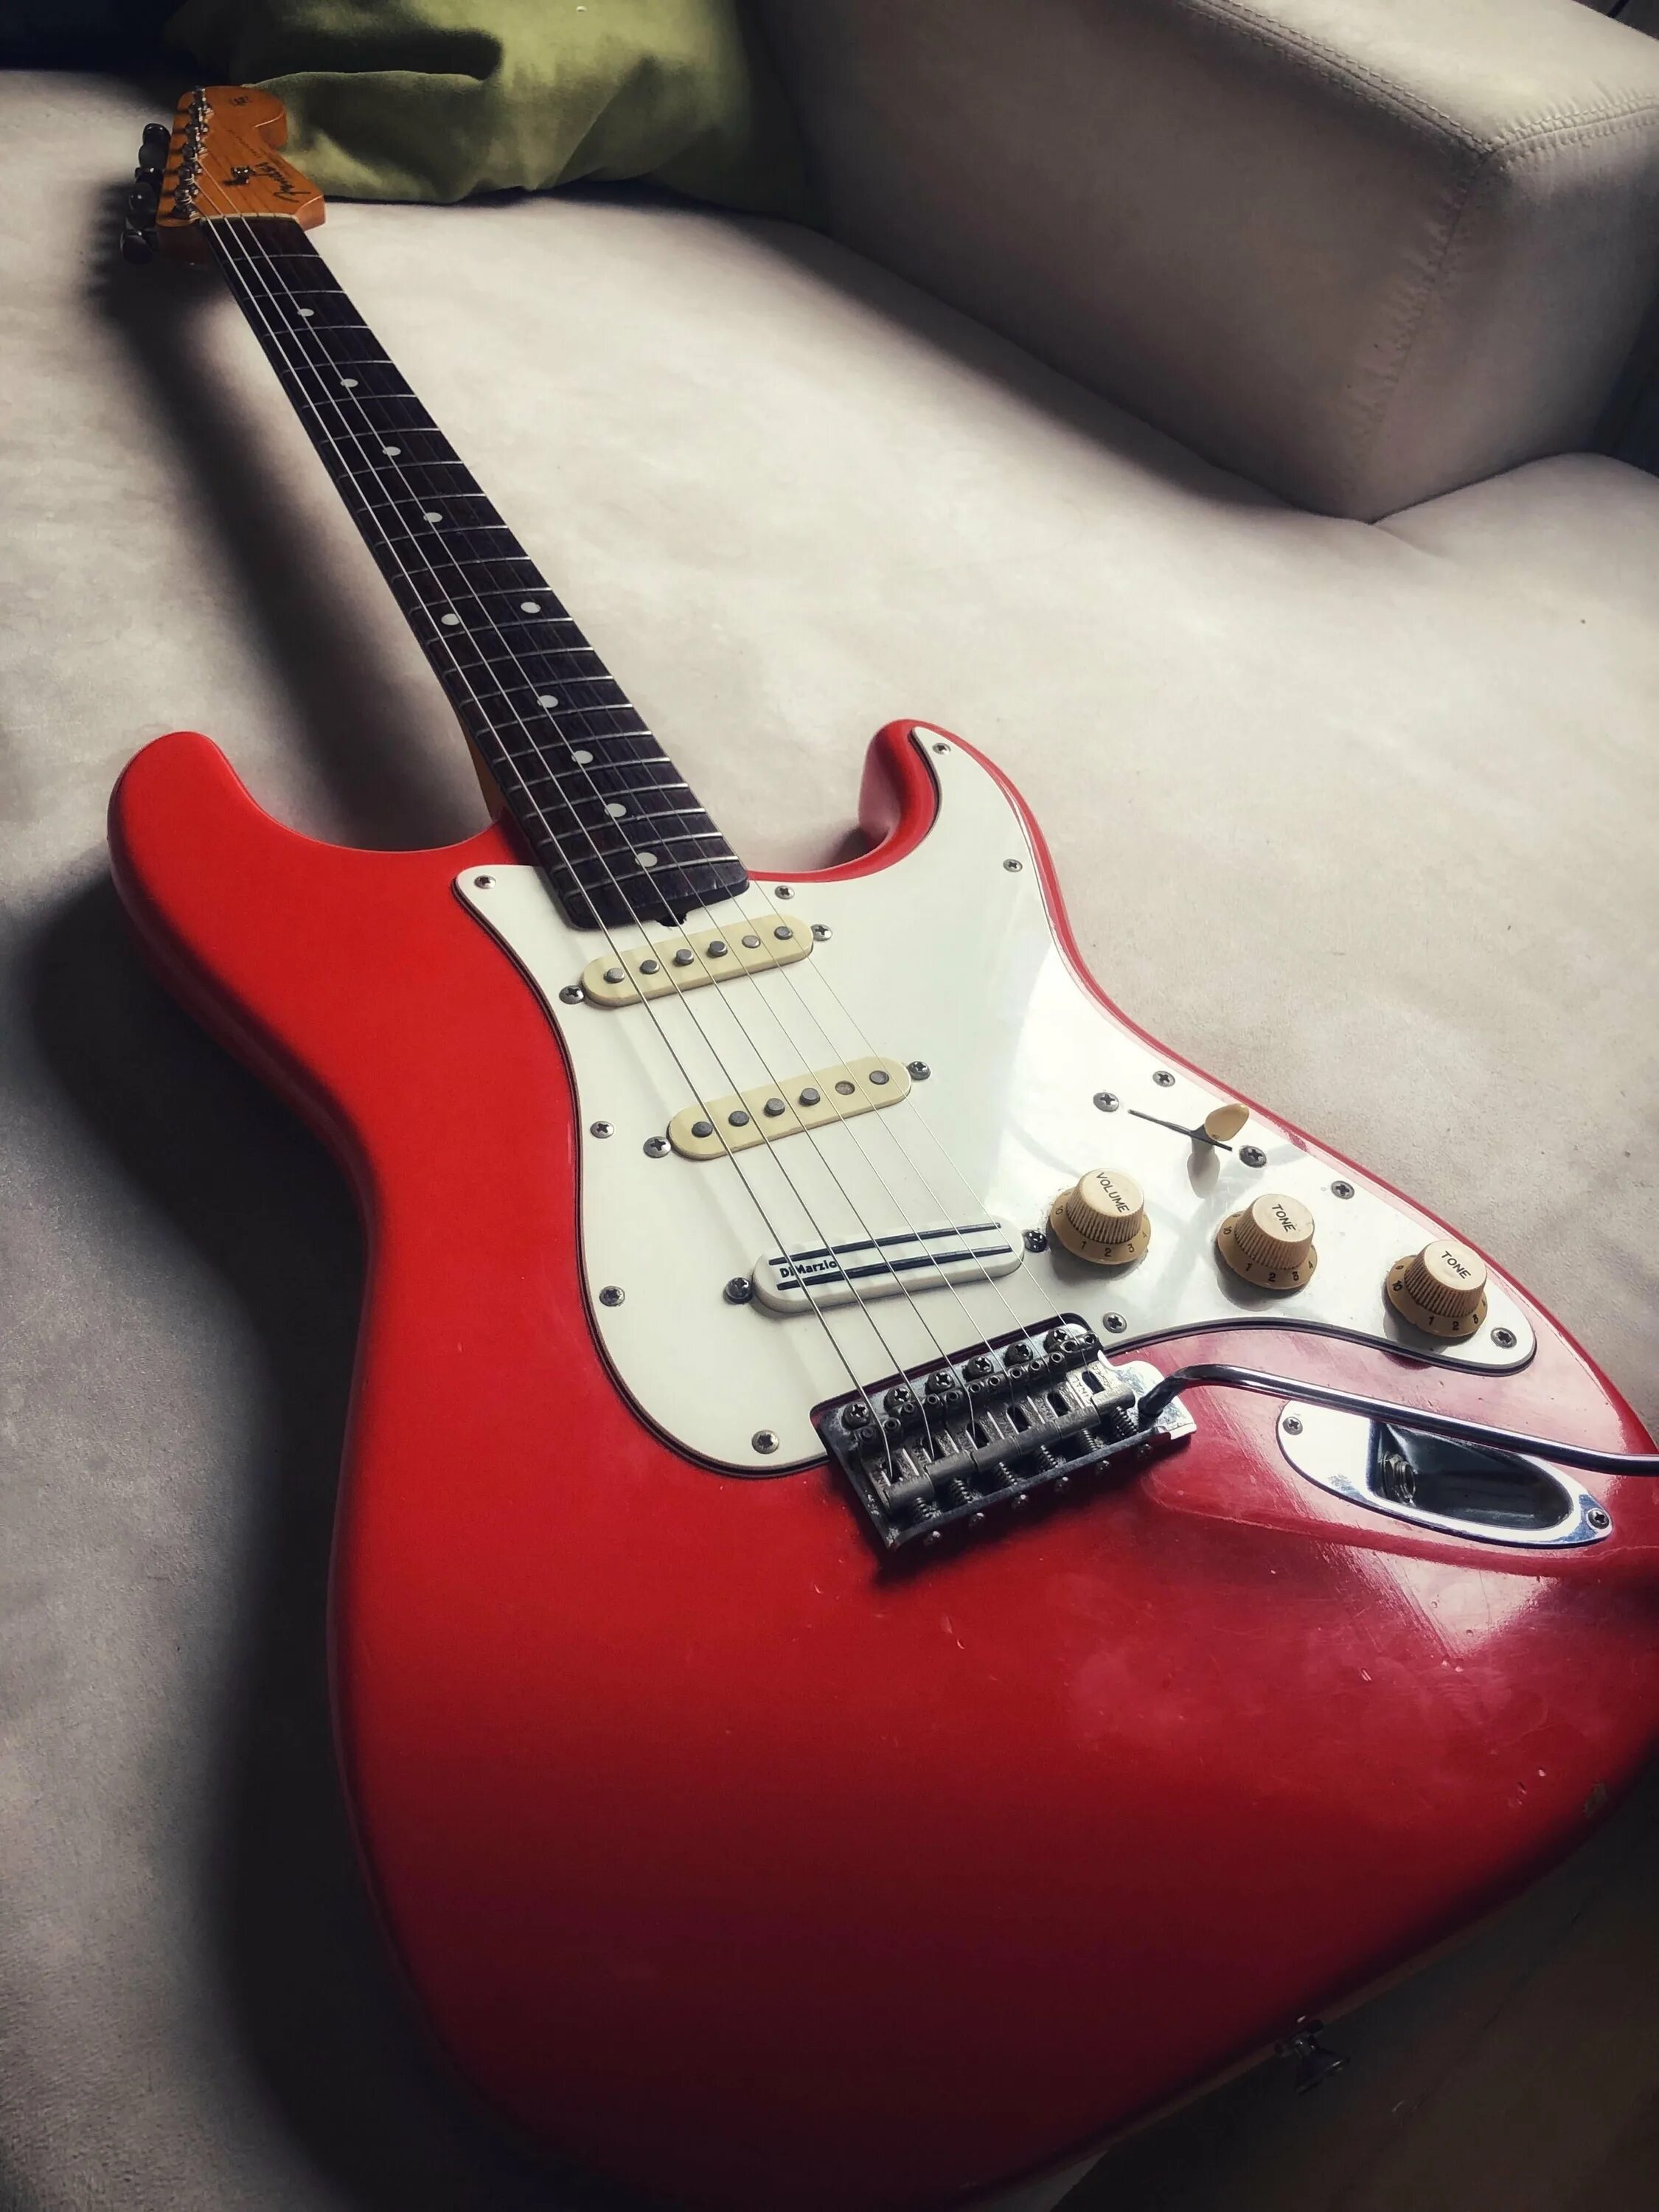 Электрогитара Fender Stratocaster. Электрогитара Clevan Stratocaster. Гитара Fender Stratocaster Red. Fender Stratocaster красный. Гитара эстетика